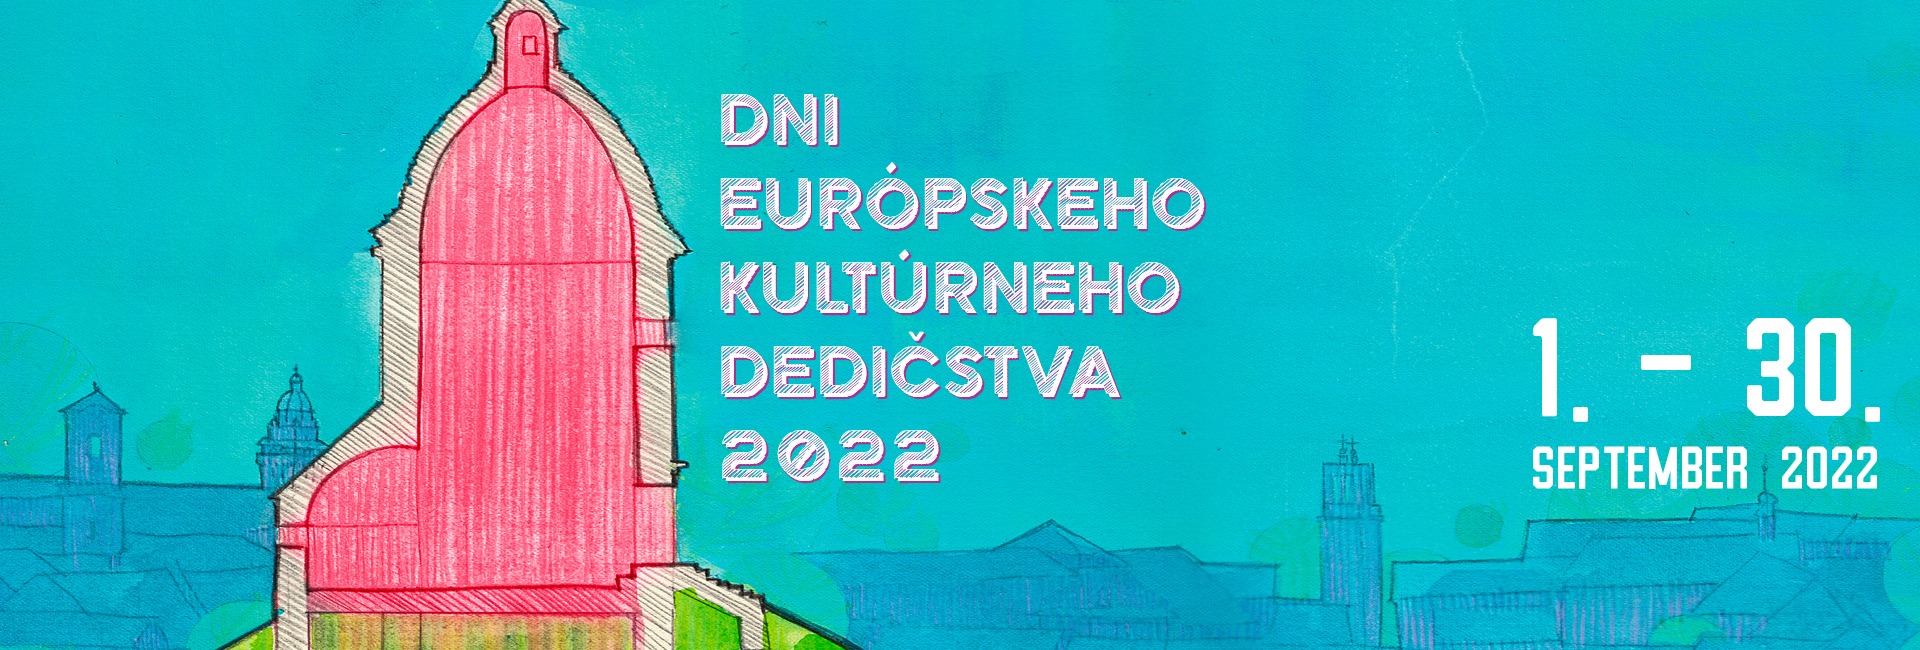 Dni eurpskeho kultrneho dedistva 2022